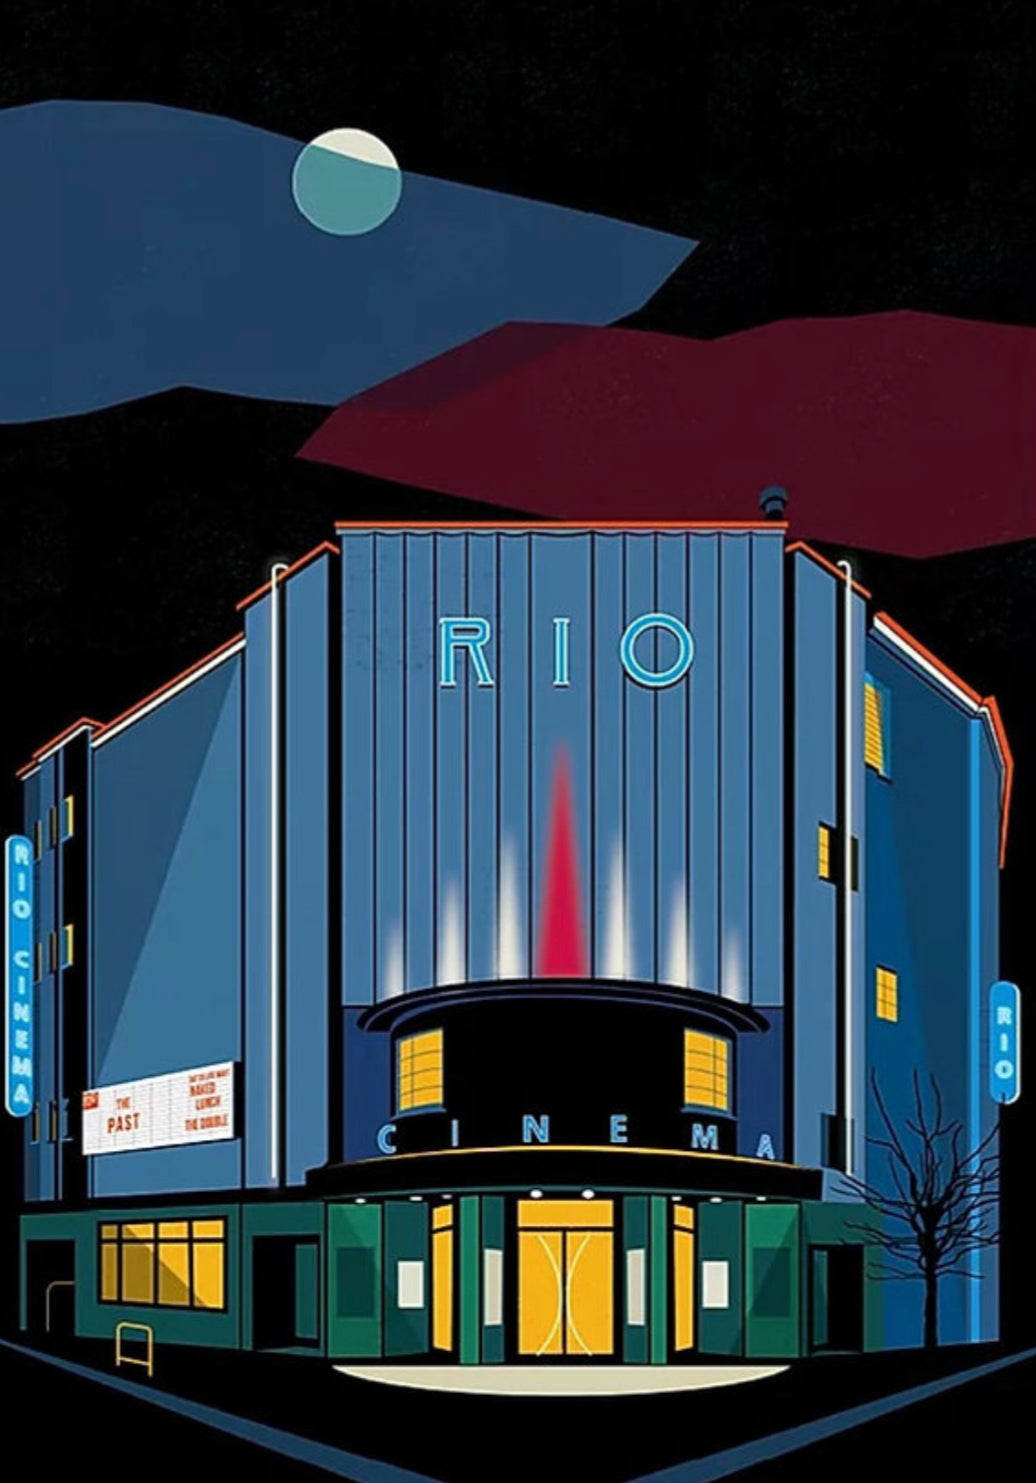 Art Deco Rio Cinema Print - A3